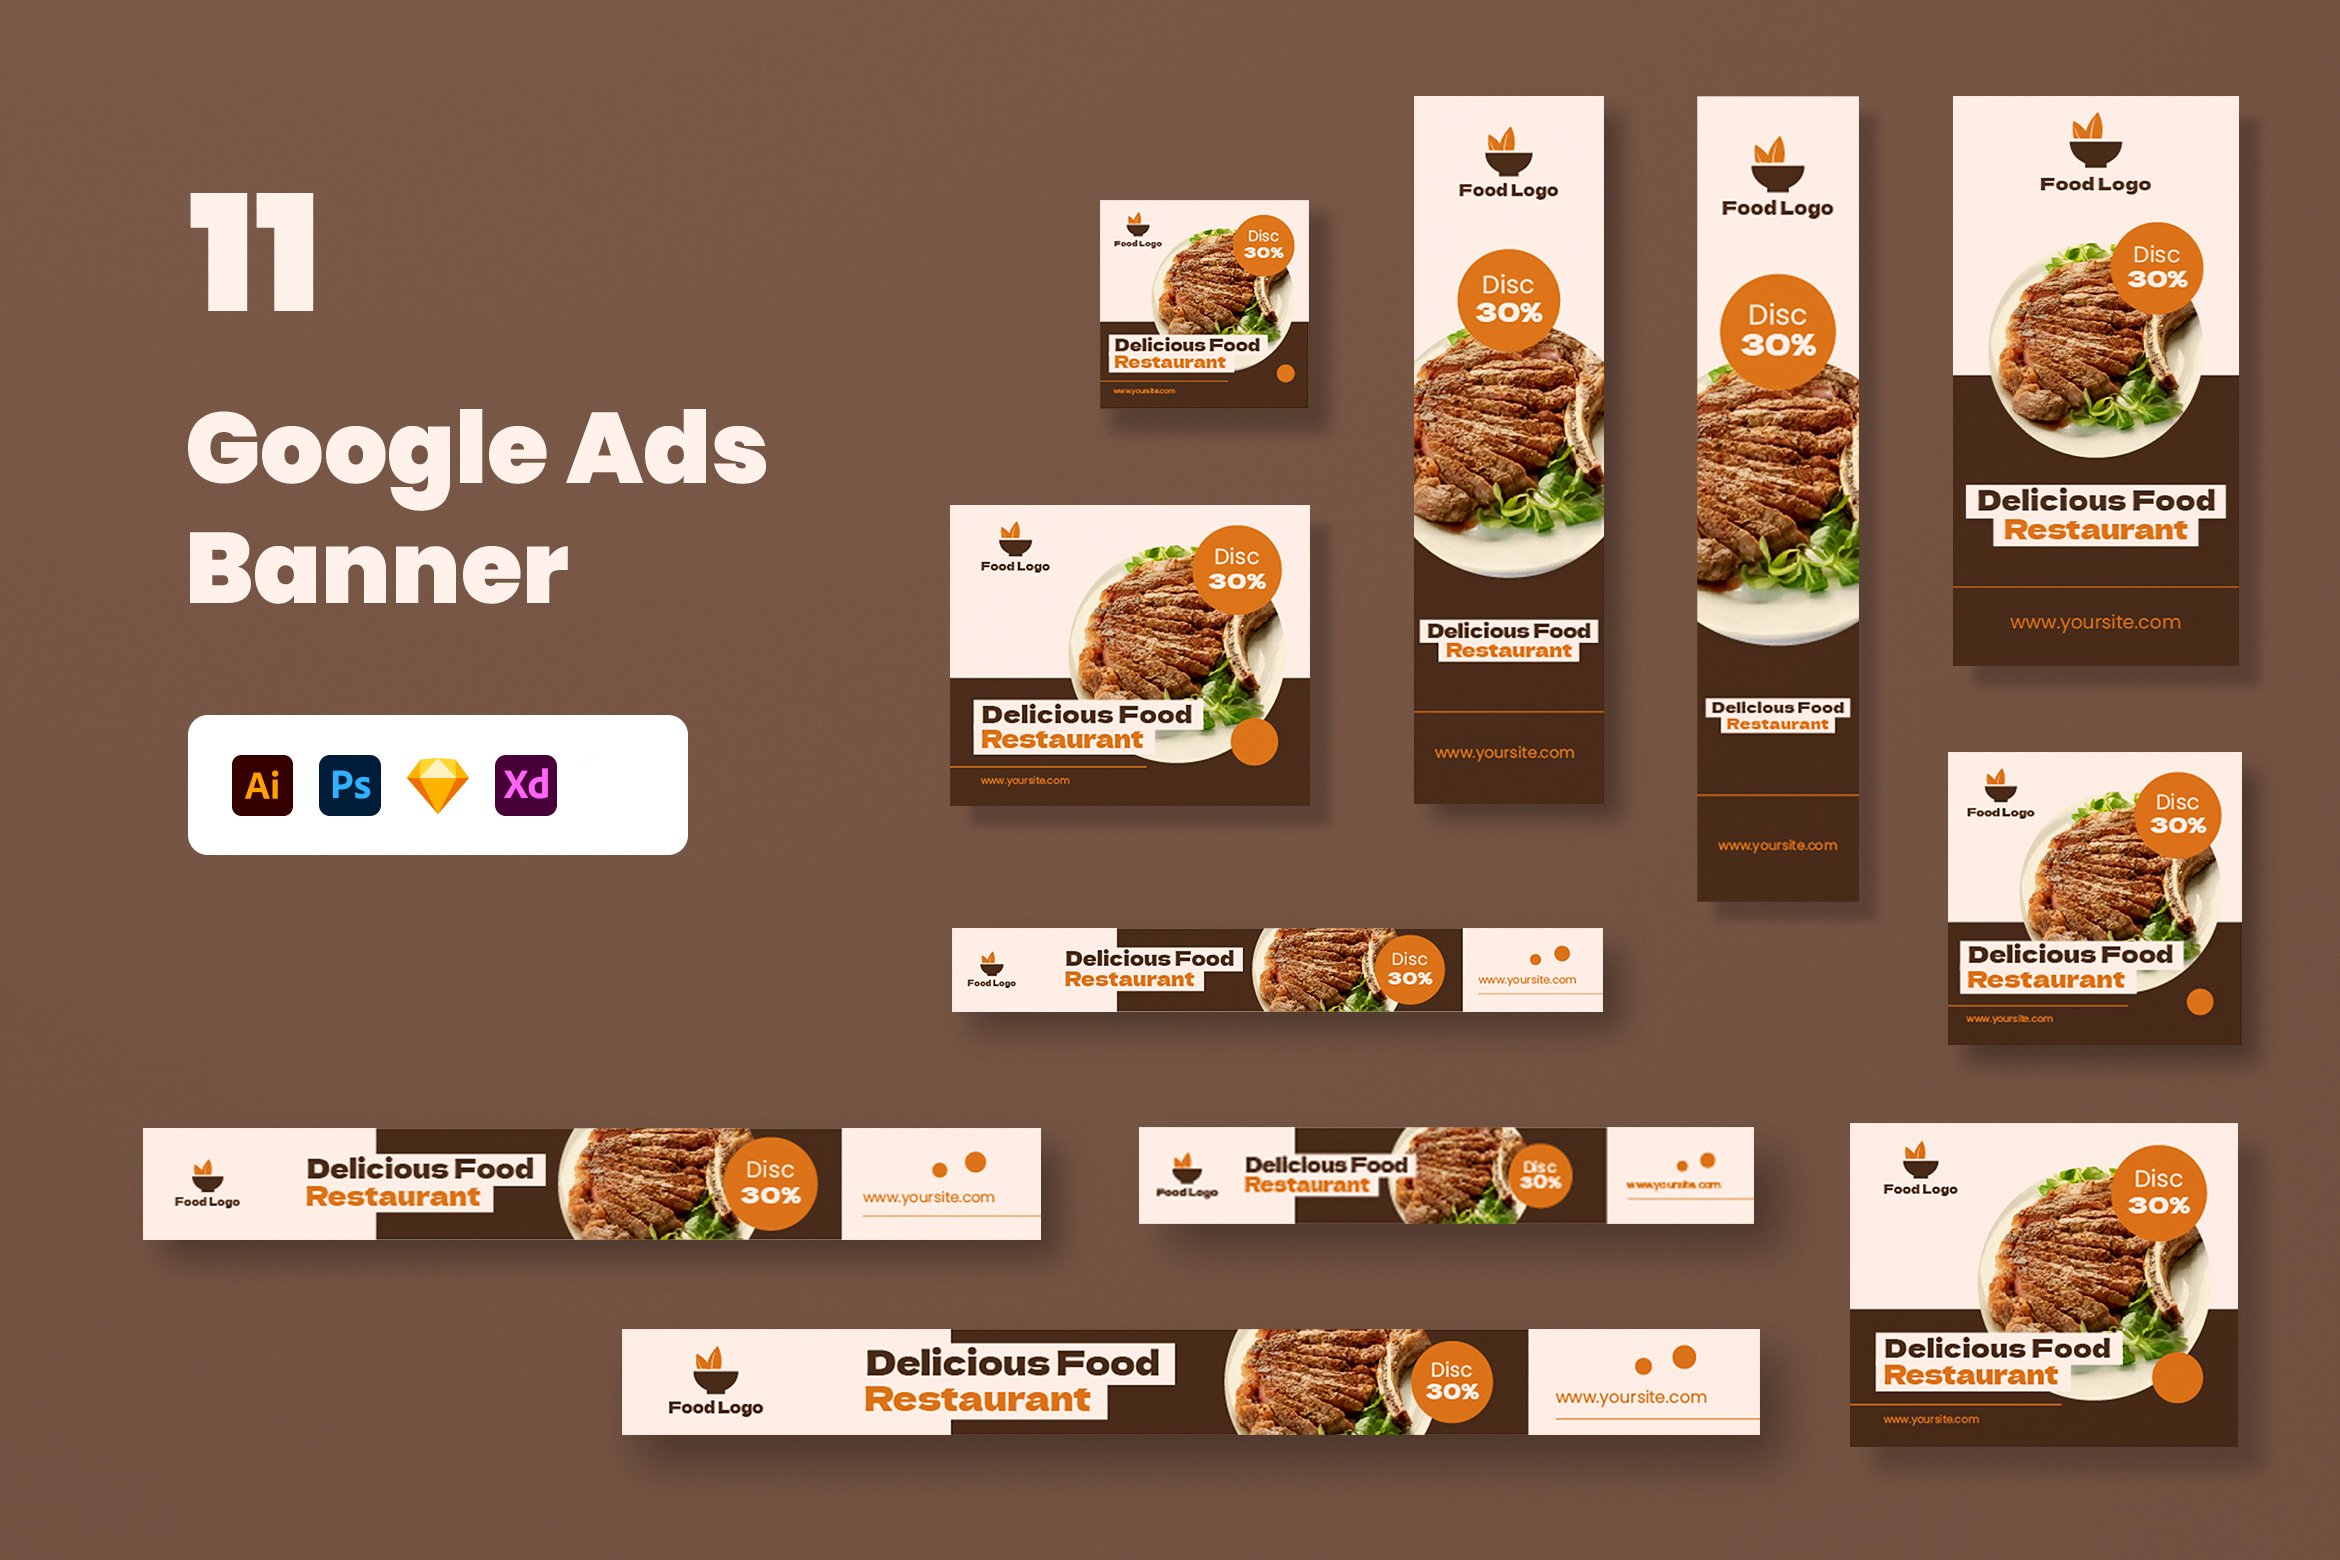 Restaurant Google Ads cover image.